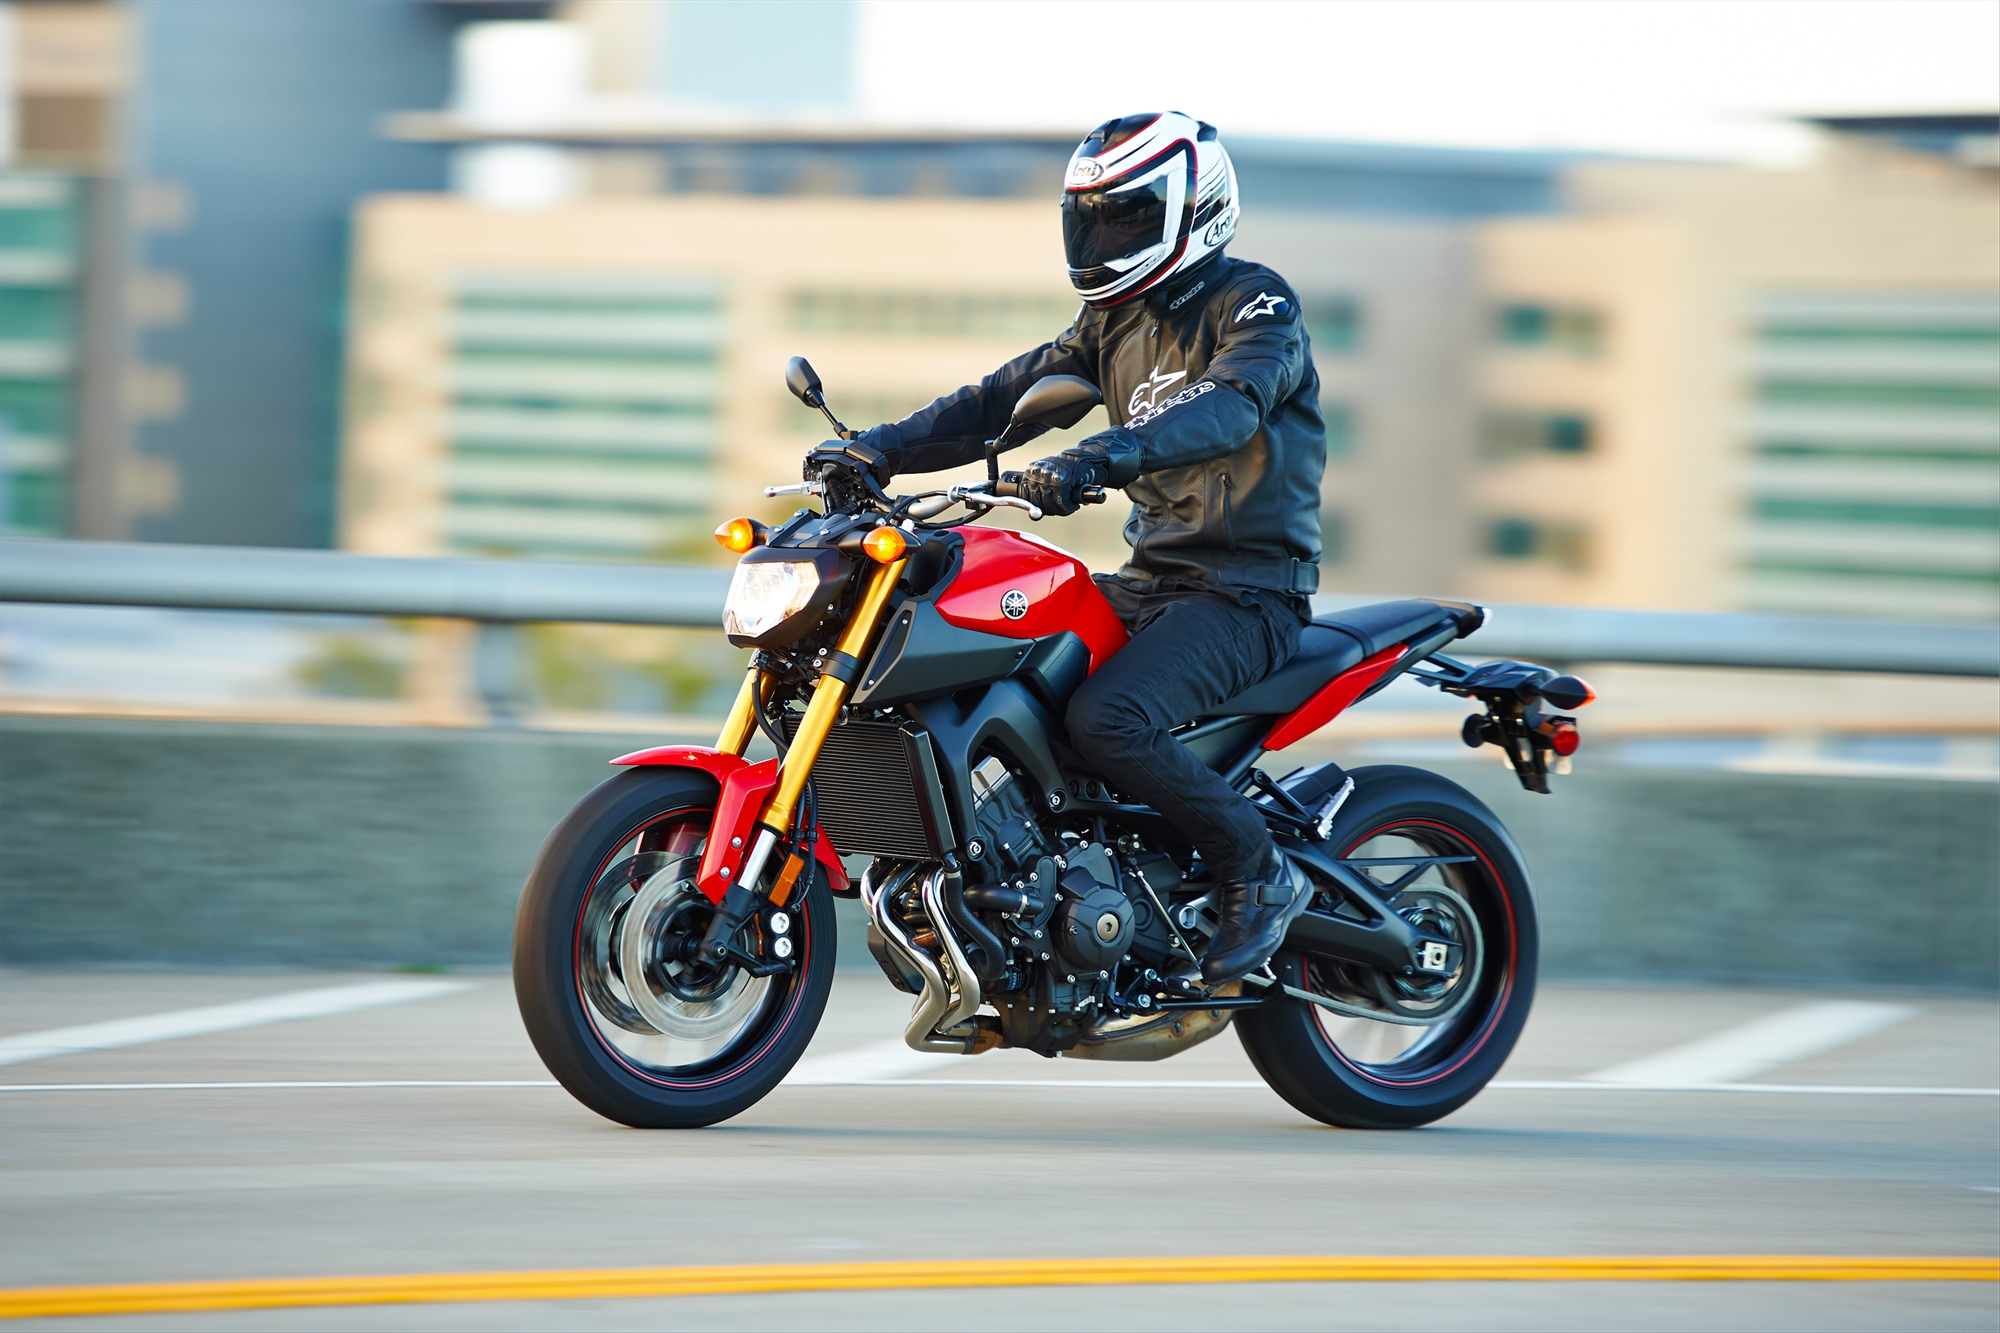 2015 Yamaha Brand FZ-09, Yamaha Motorcycles Are Priced At 